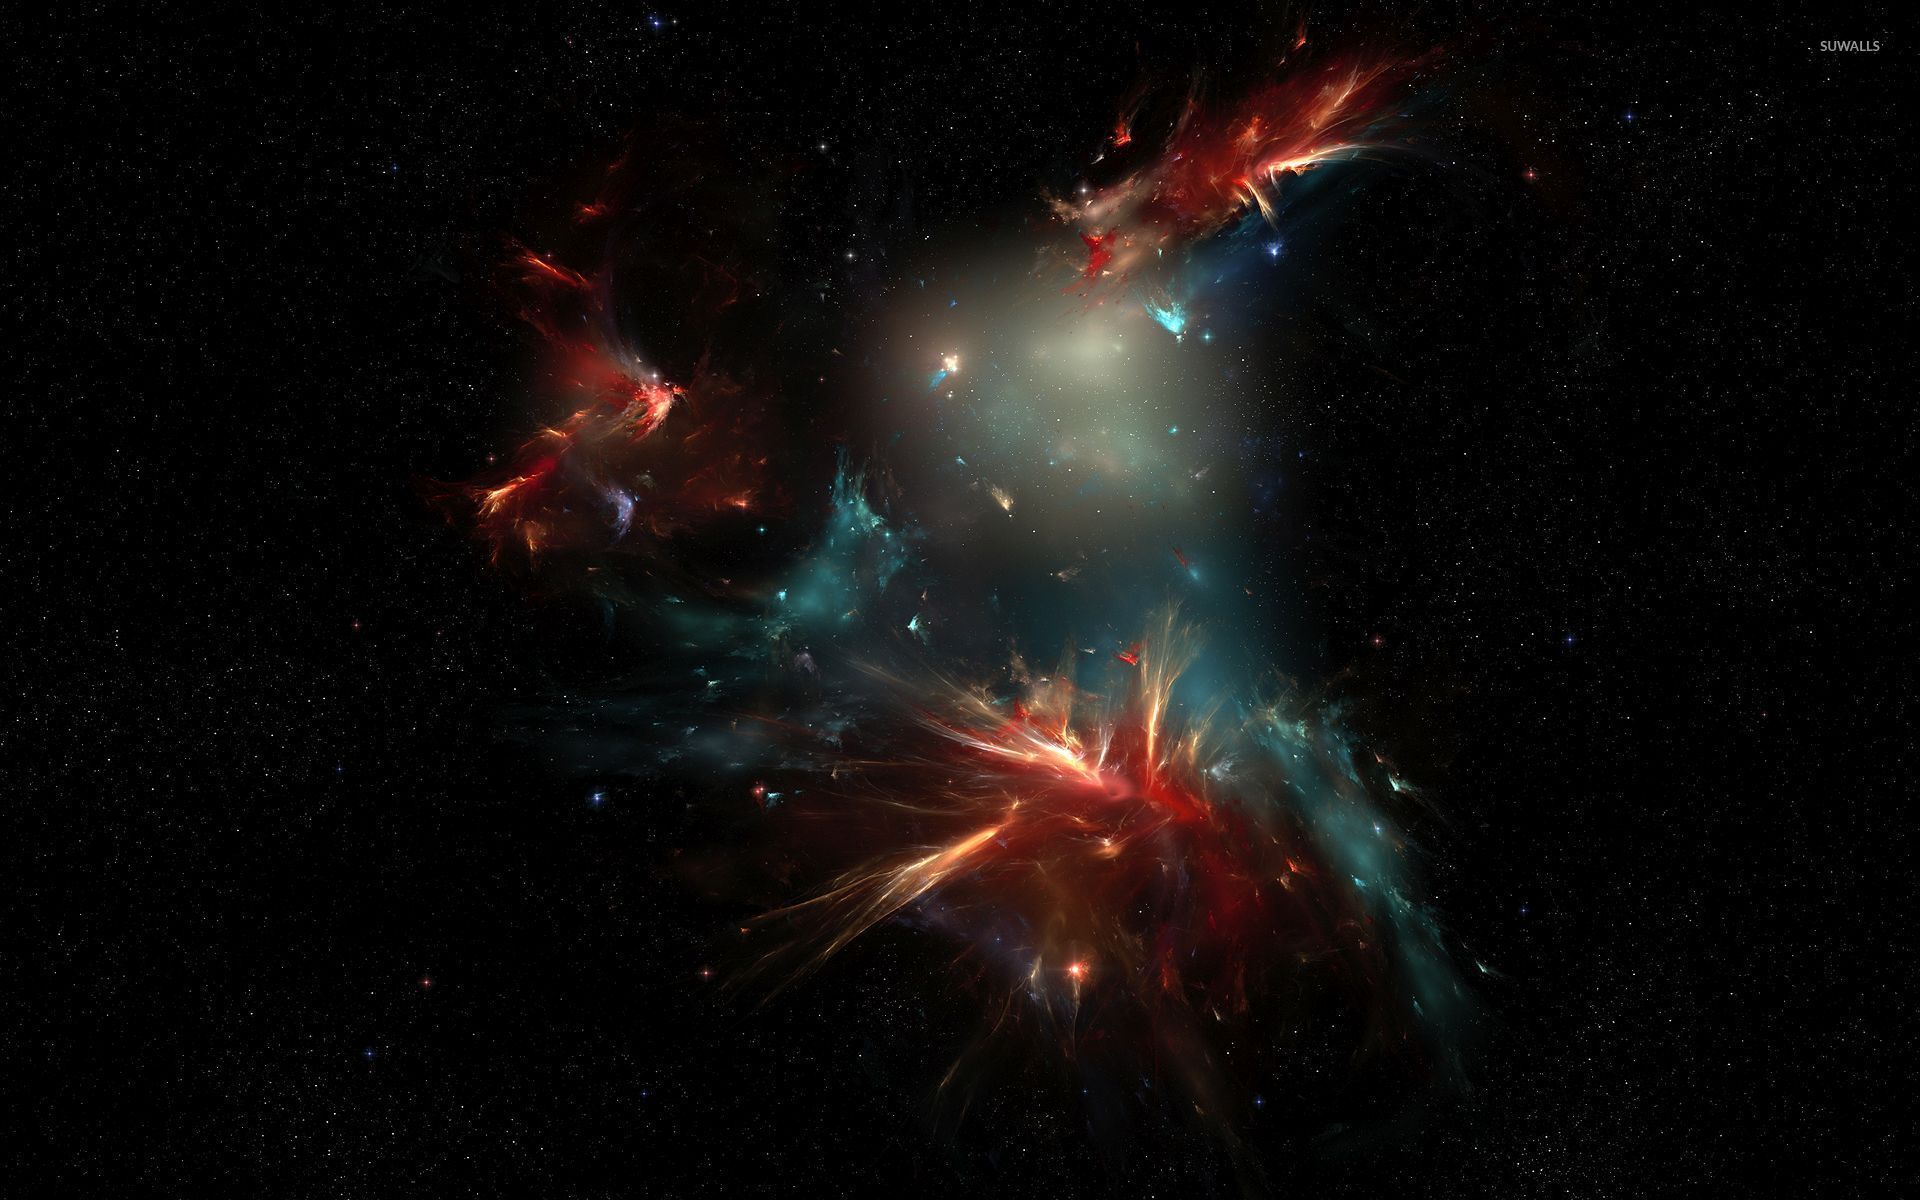 Galaxia roja en el fondo de pantalla del universo - Fondos de pantalla espaciales - # 53876